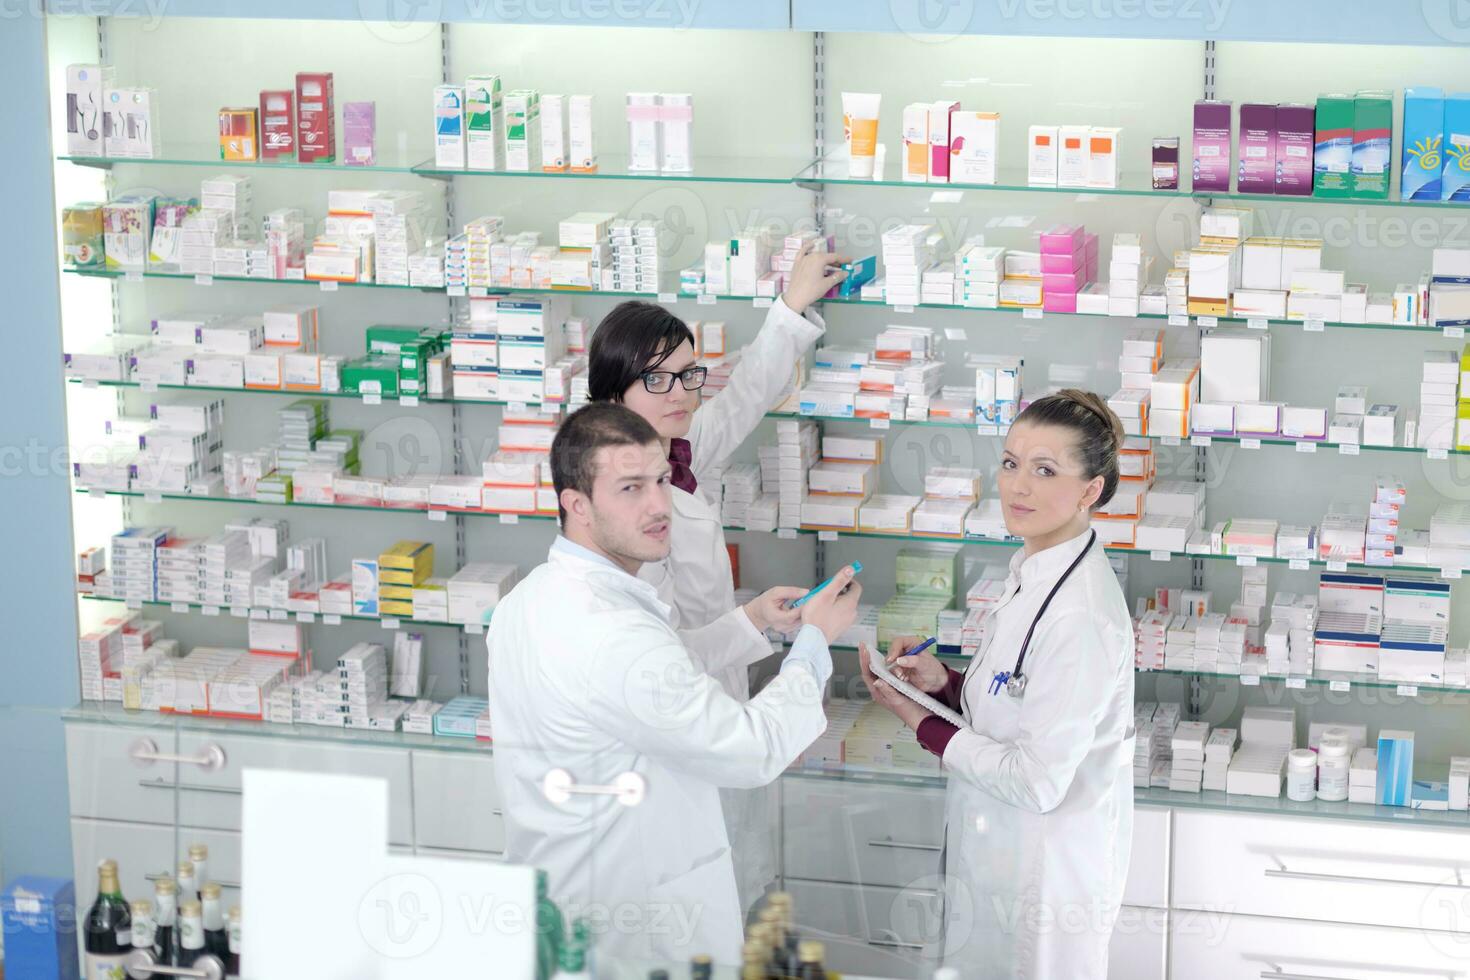 équipe de personnes pharmacie pharmacie photo